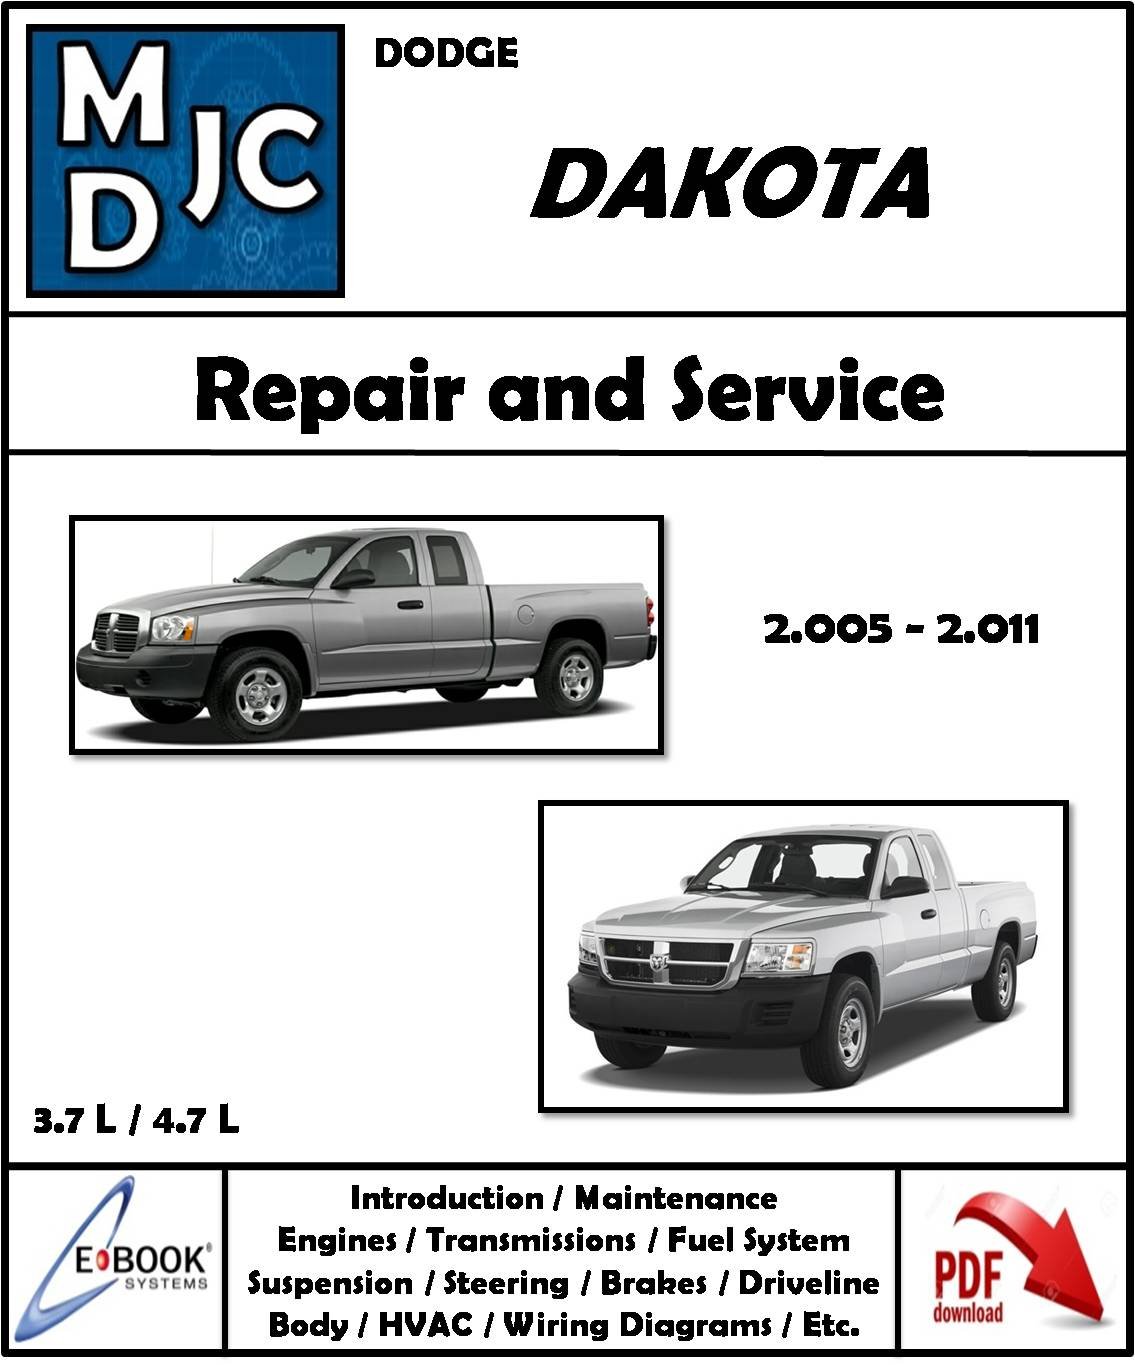 Manual de Taller Dodge Dakota 2005-2011